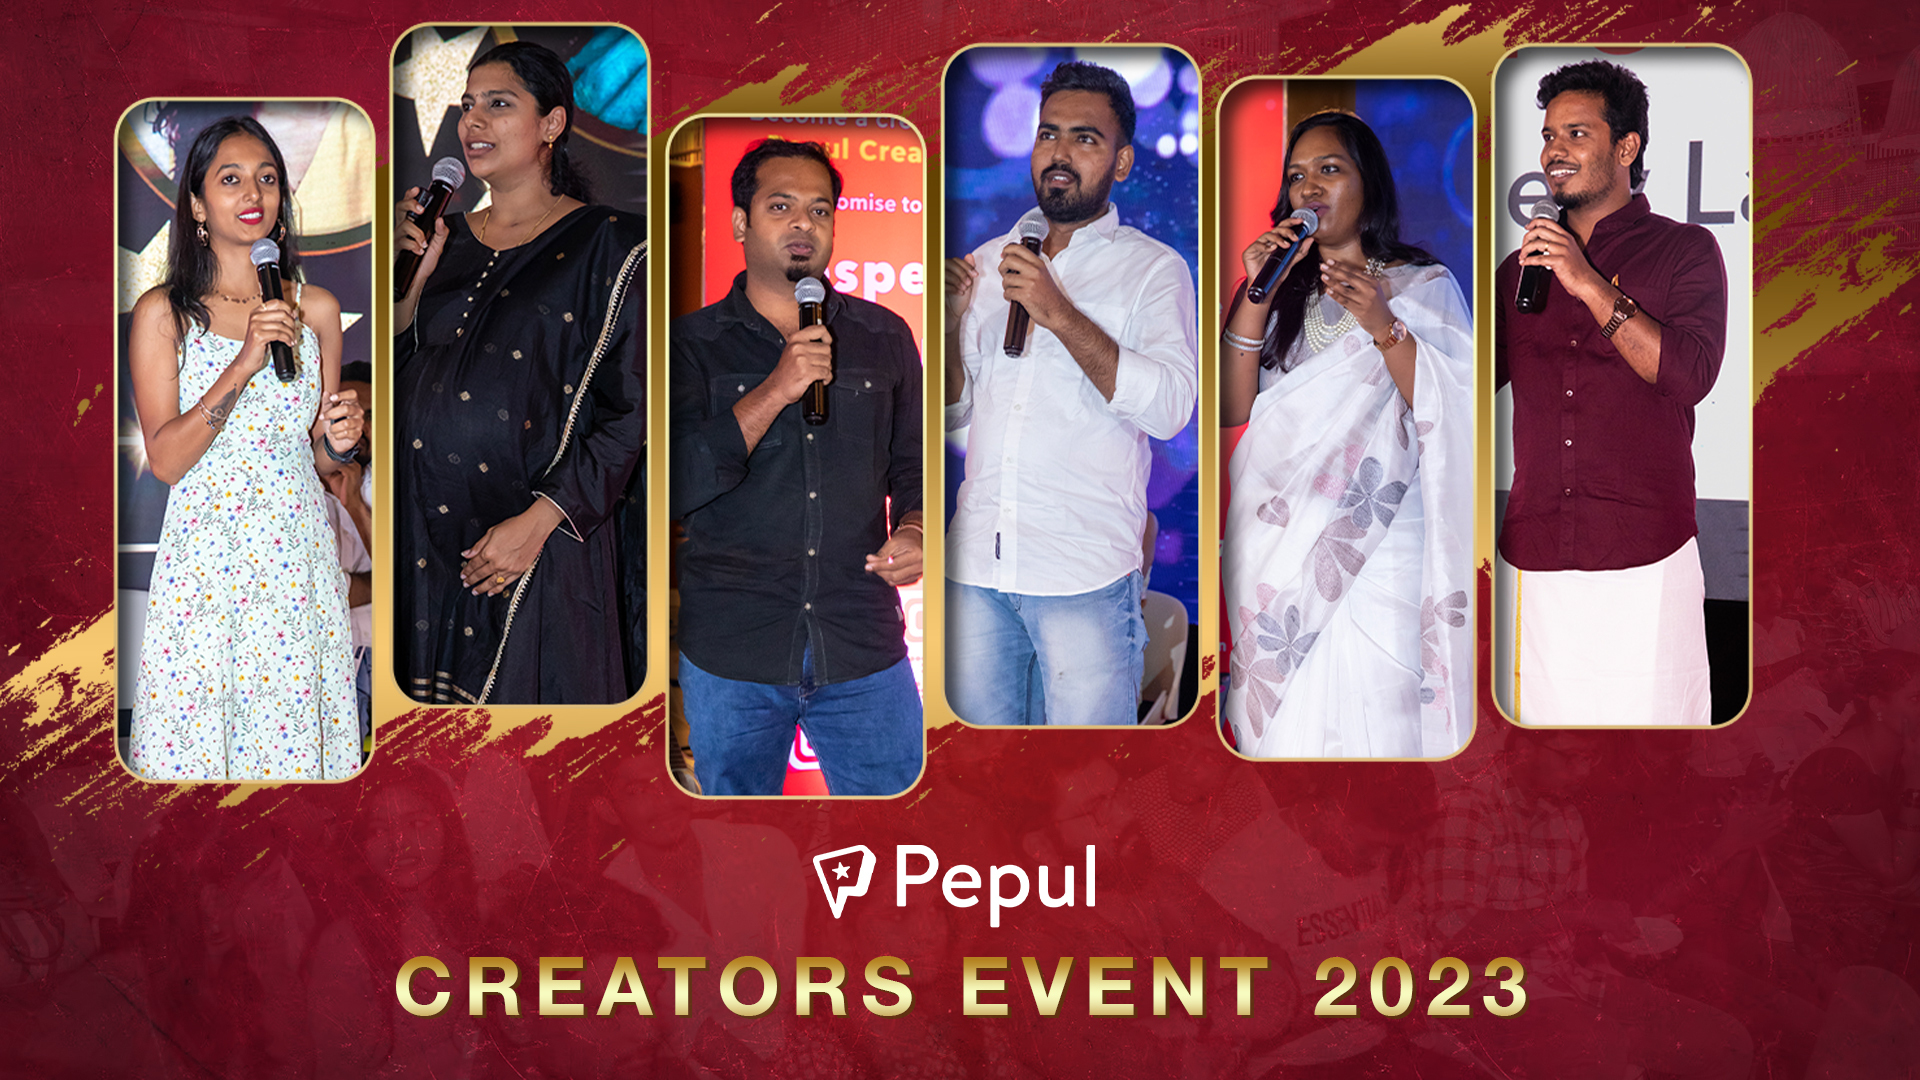 A recap of the First-Ever Pepul Creators Meet in 2023